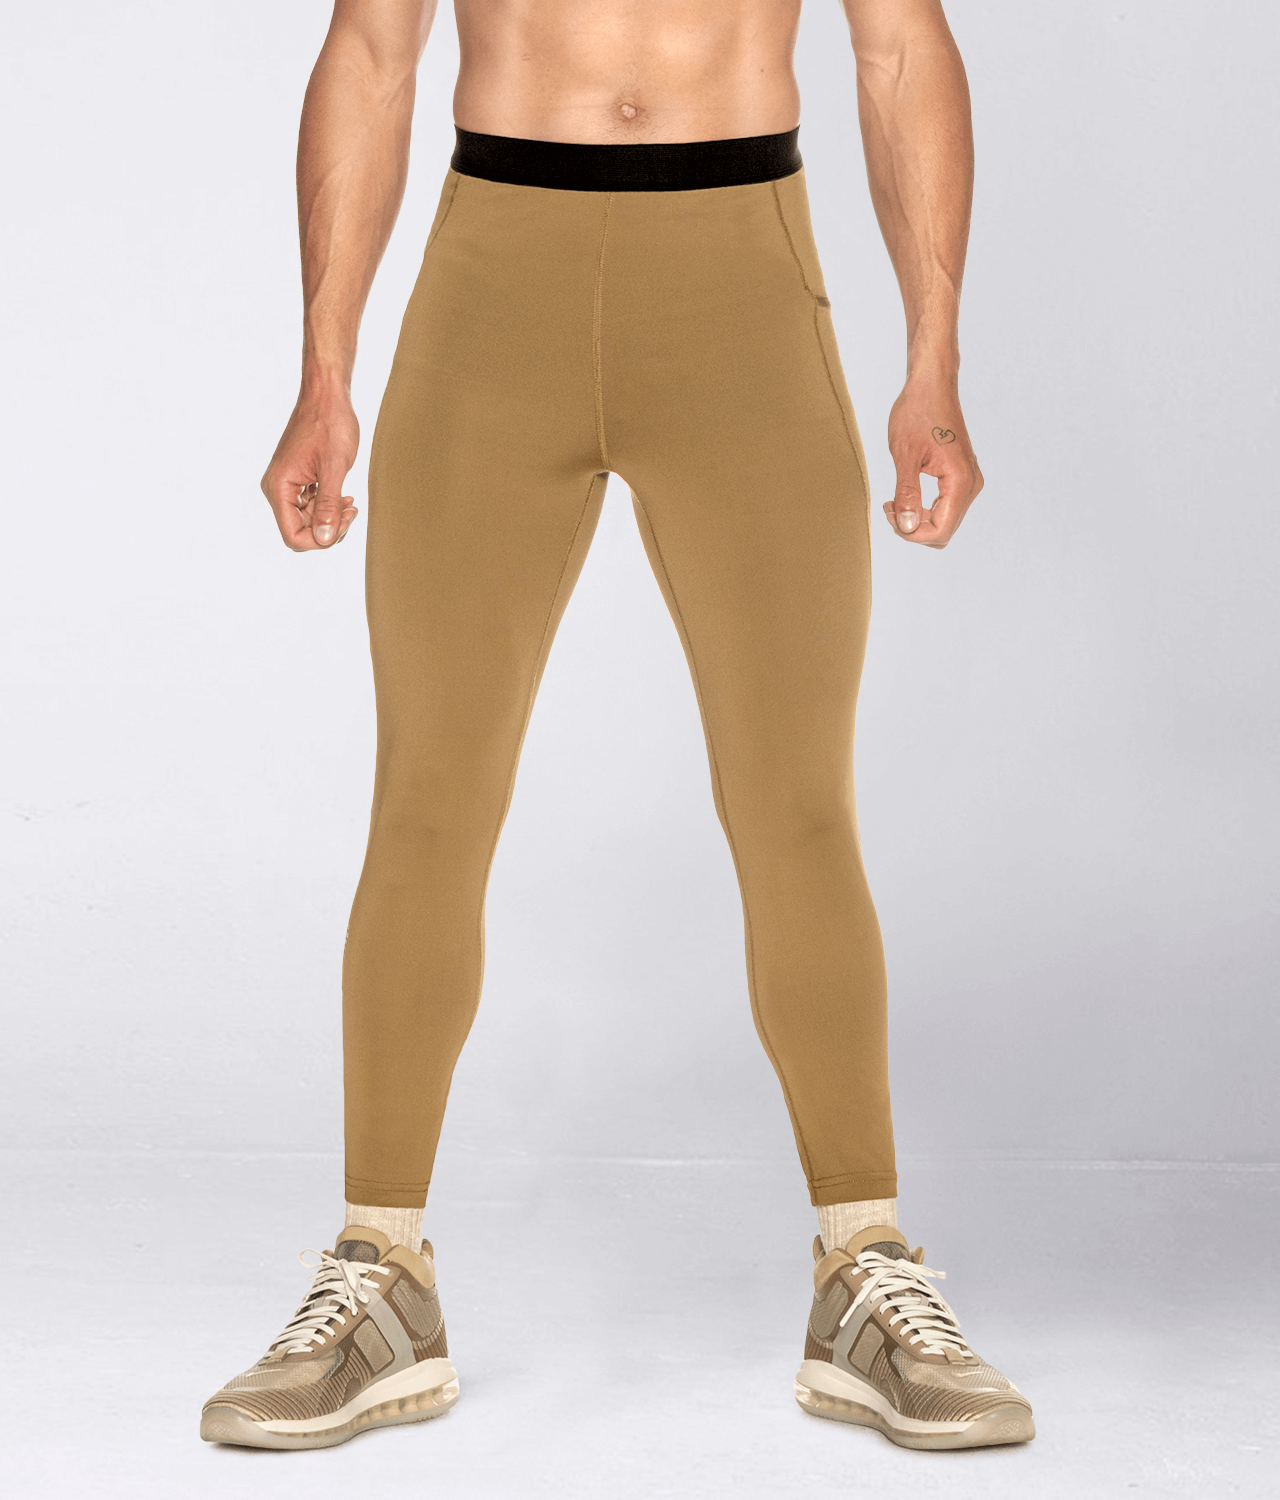 olie apologi vision Born Tough Side Pockets Compression Khaki Gym Workout Legging Pants For Men